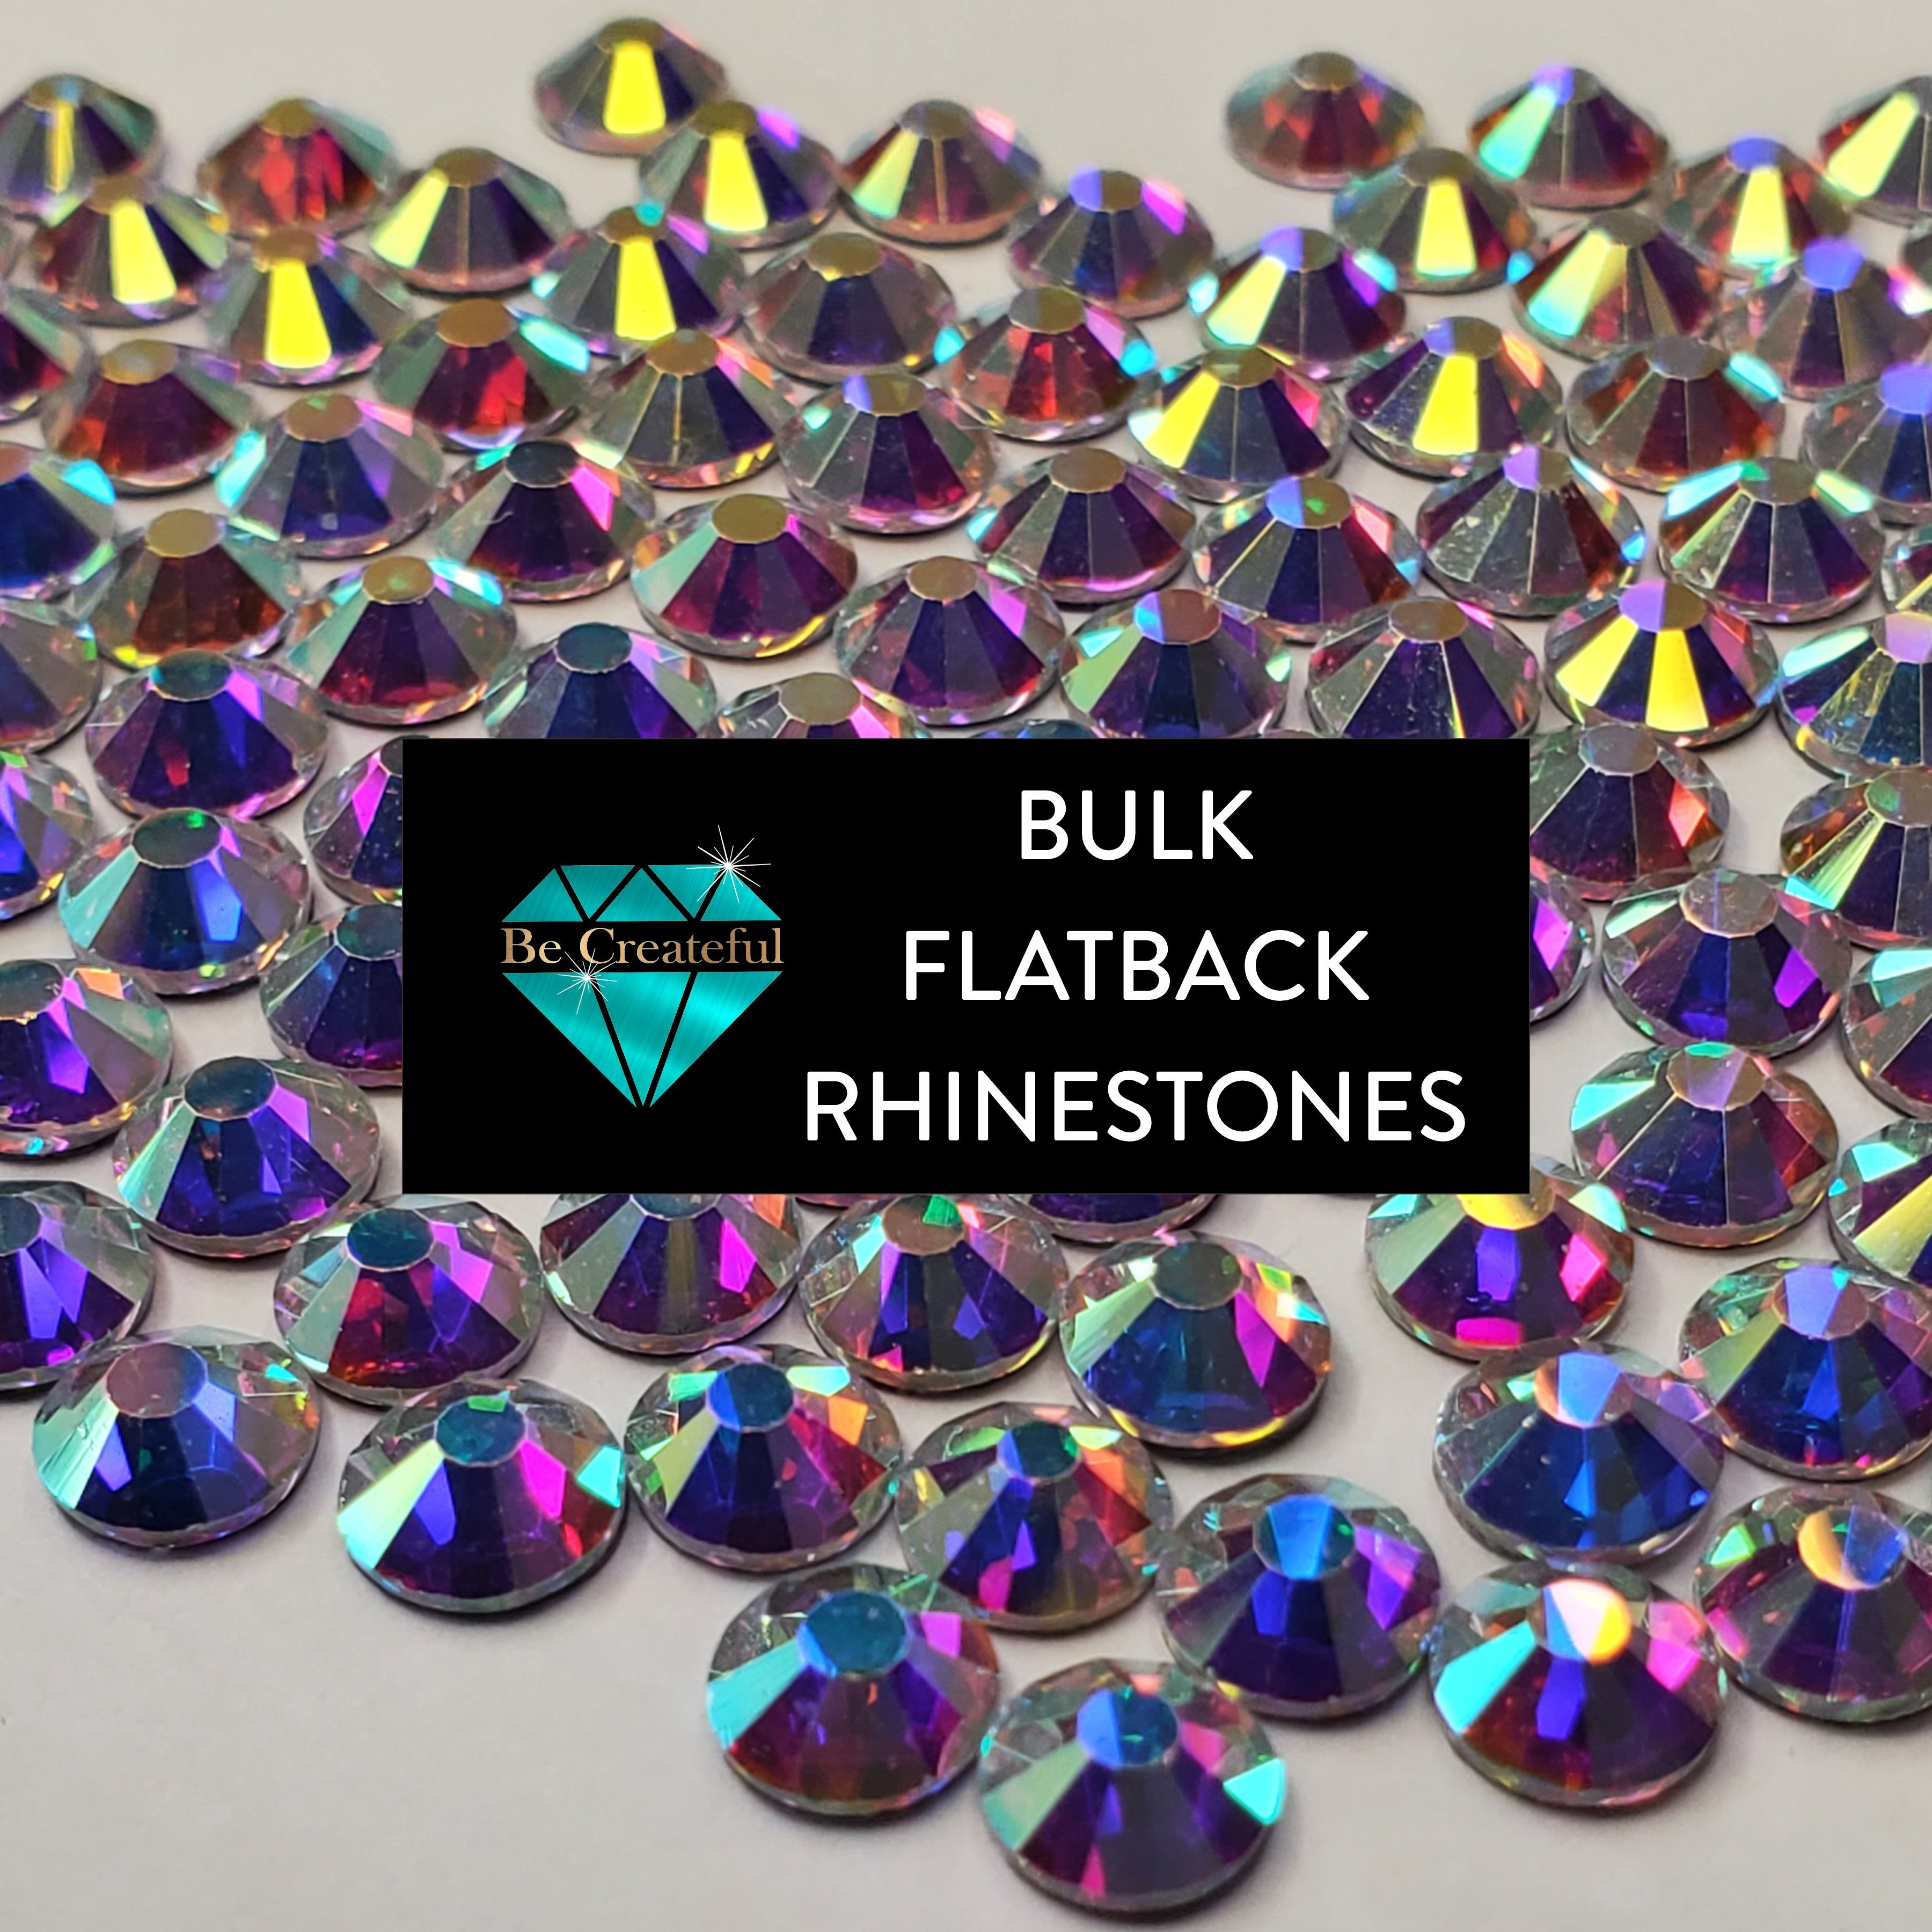 Black Rhinestones Glue On Crystals Crafts Making Flat Back Nail Art  Supplies Set